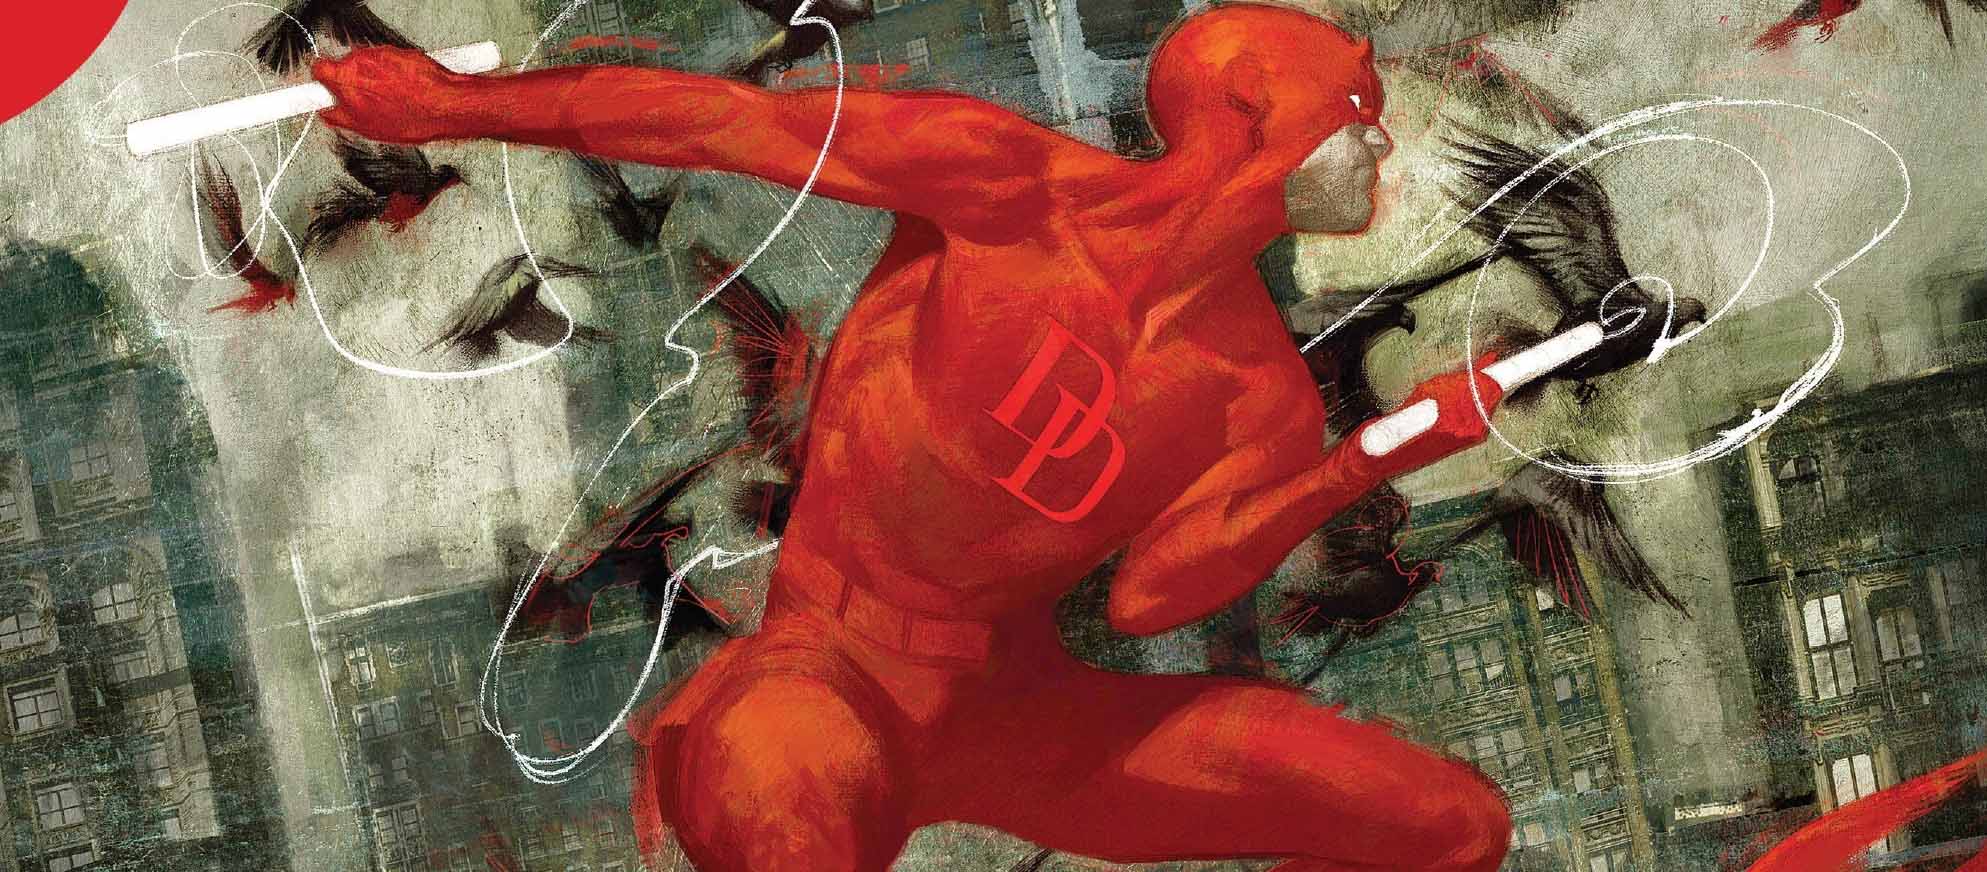 Daredevil #2 (Marvel Comics Snapshot Review) | Comicdom